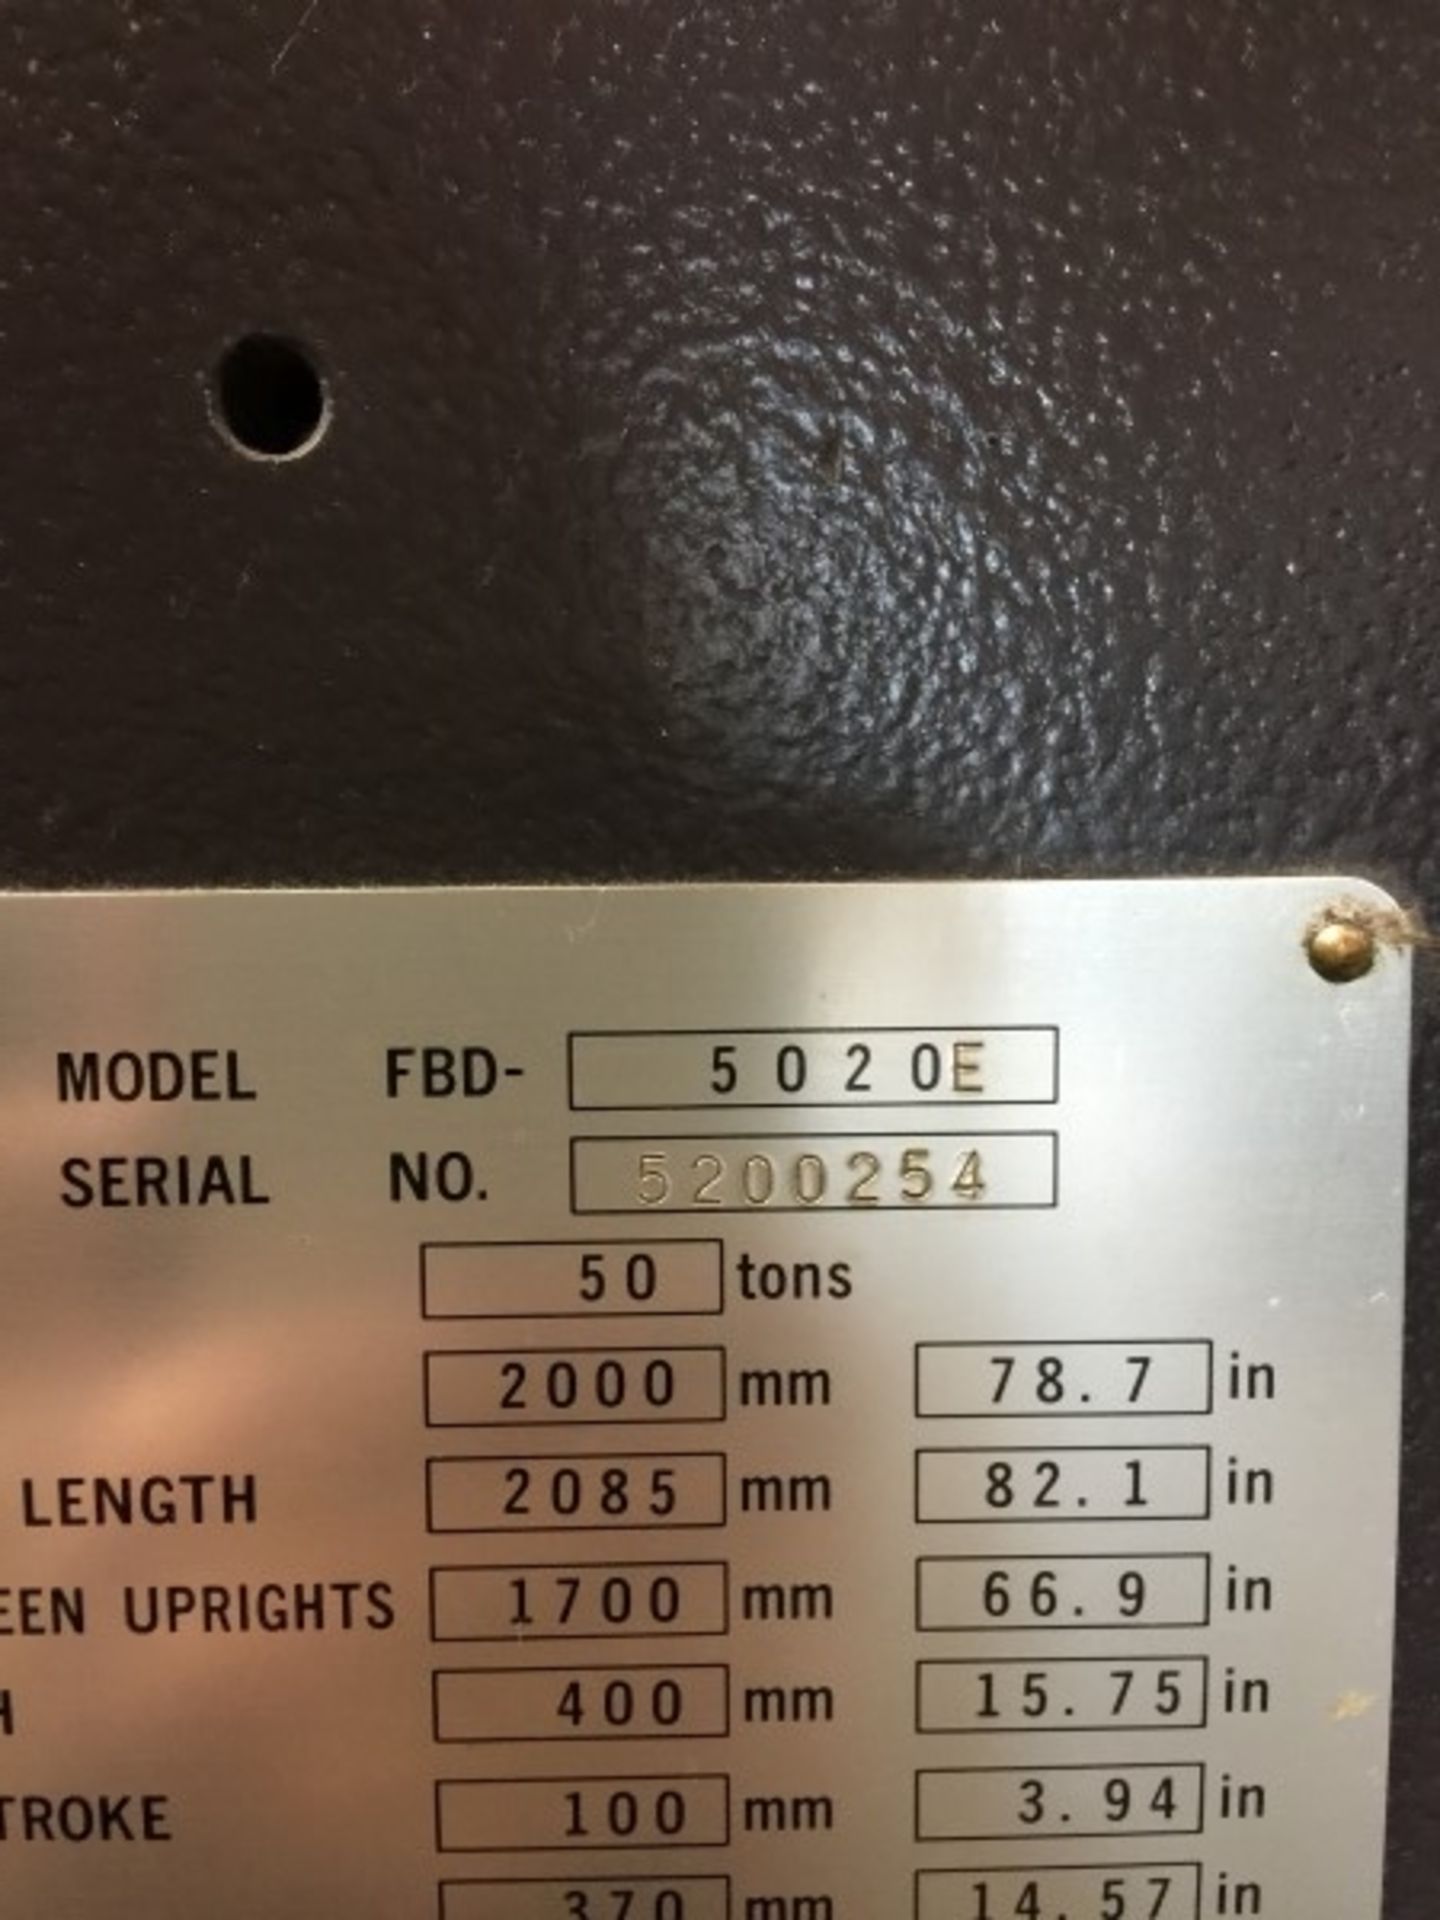 1989 Amada Press Brake - Model FBD 5020E, S/N: 520025Y - Image 5 of 7